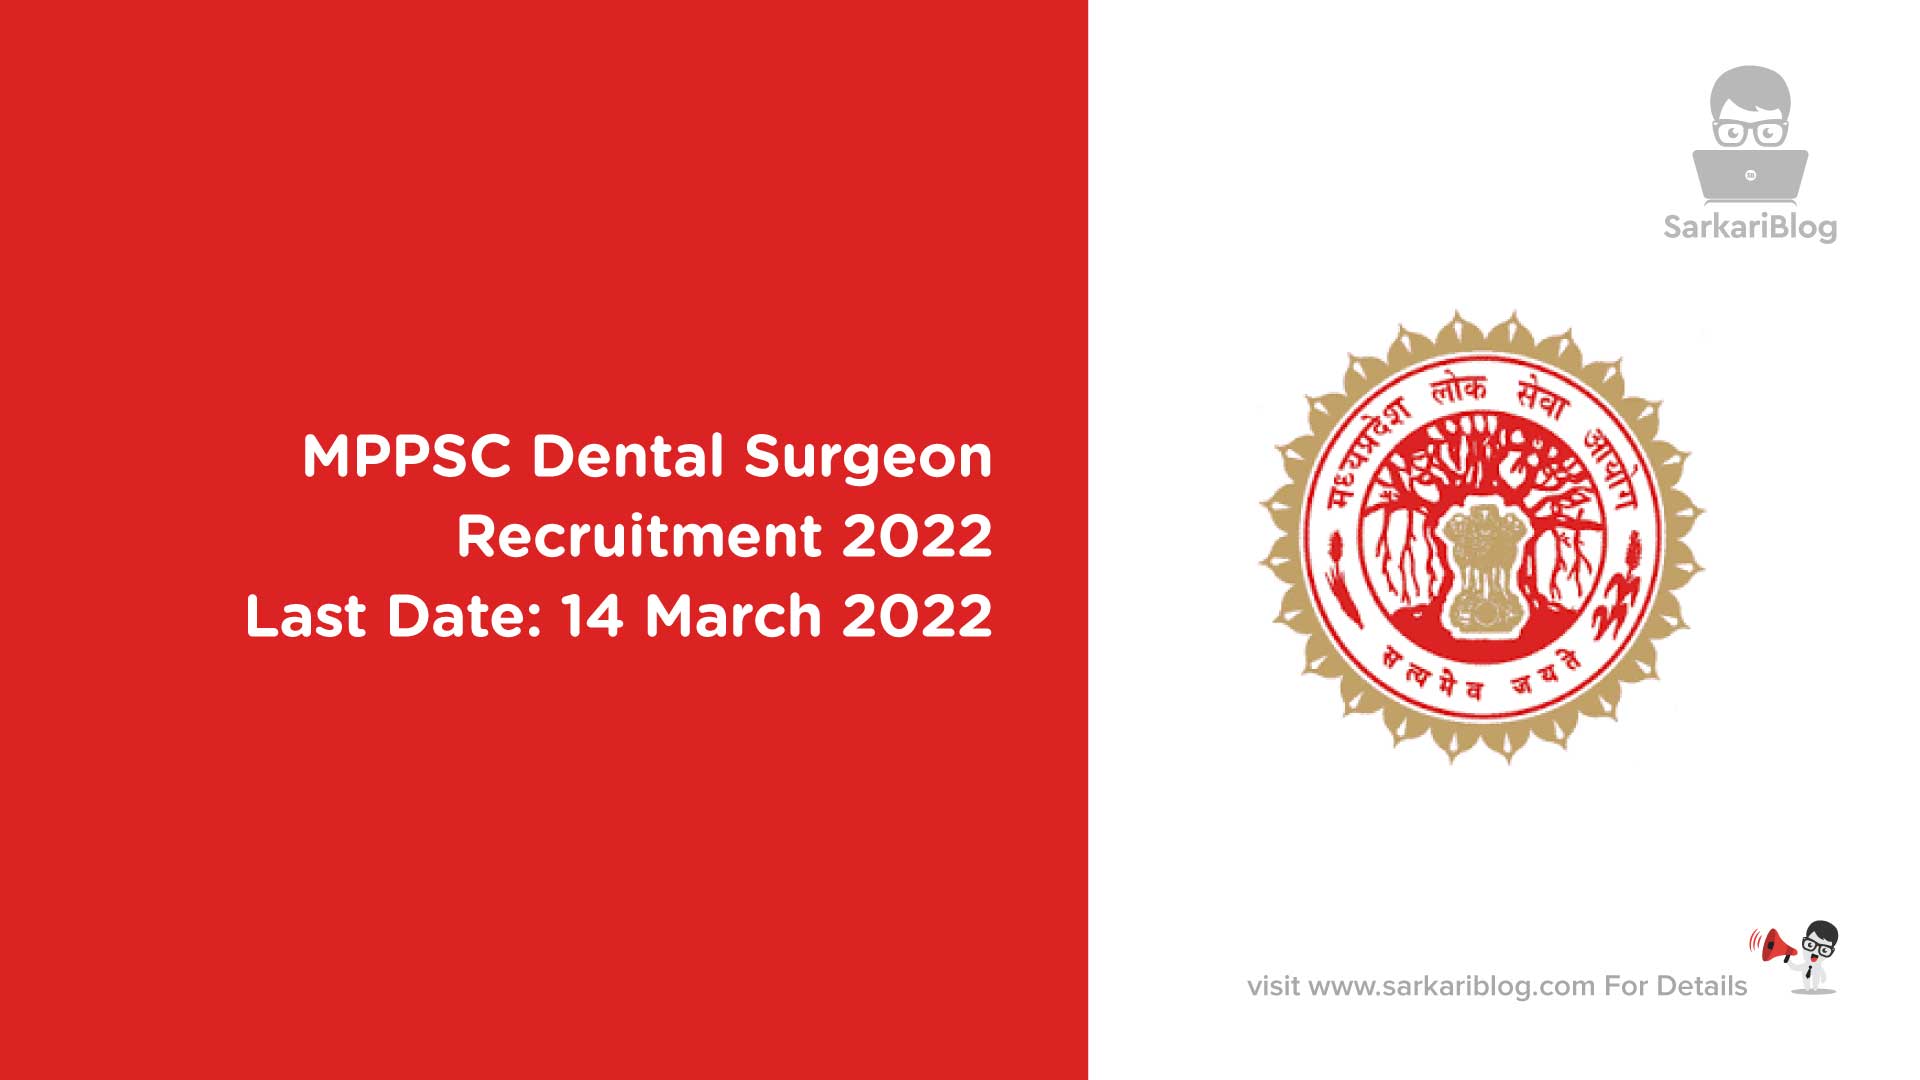 MPPSC Dental Surgeon Recruitment 2022